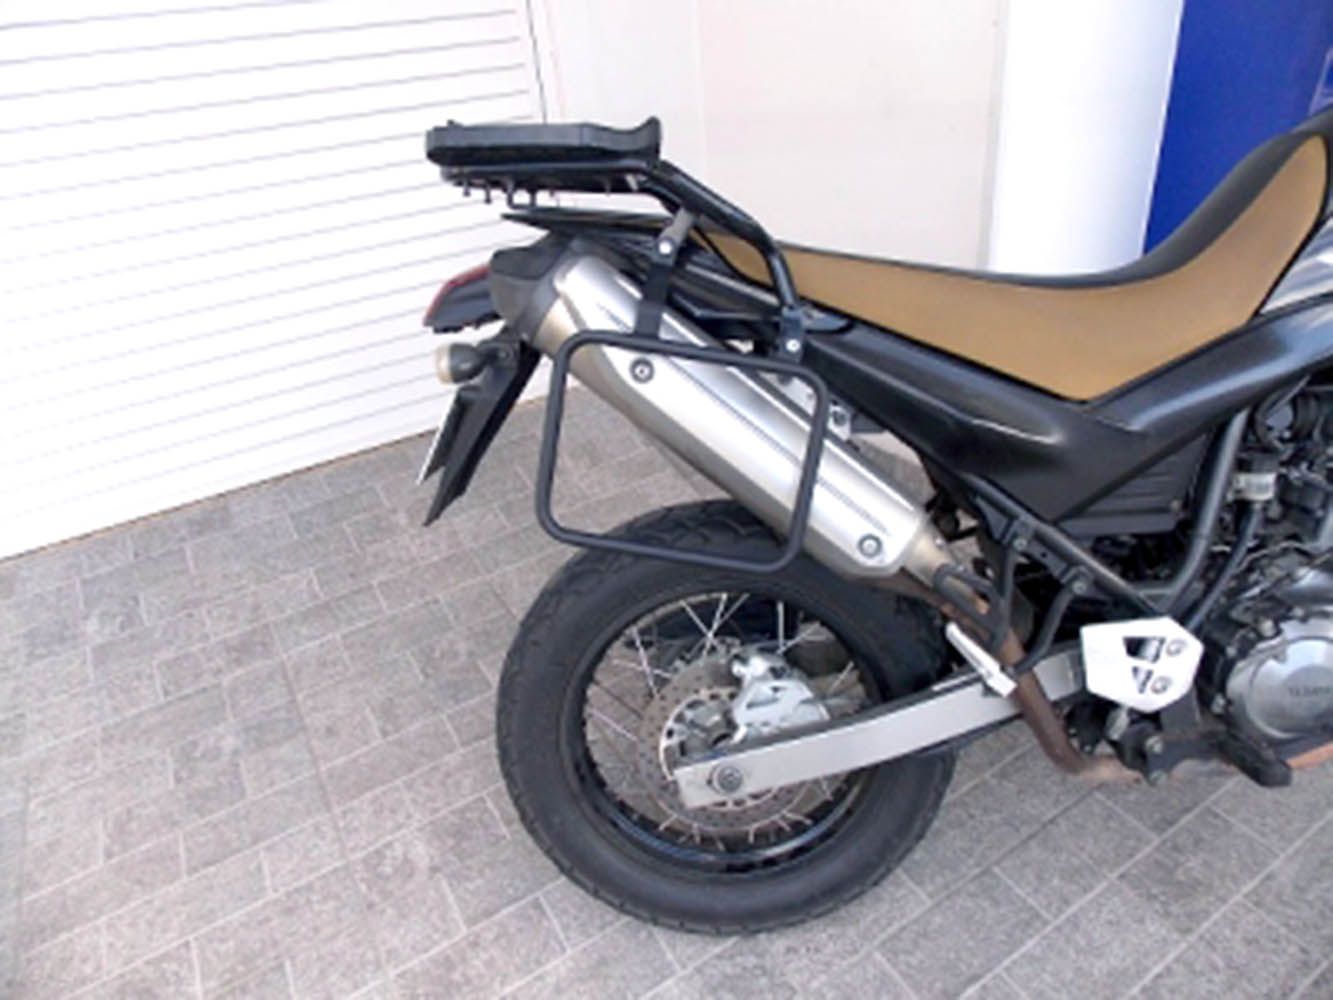 Afastador Alforge Yamaha Xt 660 R Preto Fosco Chapam 10731